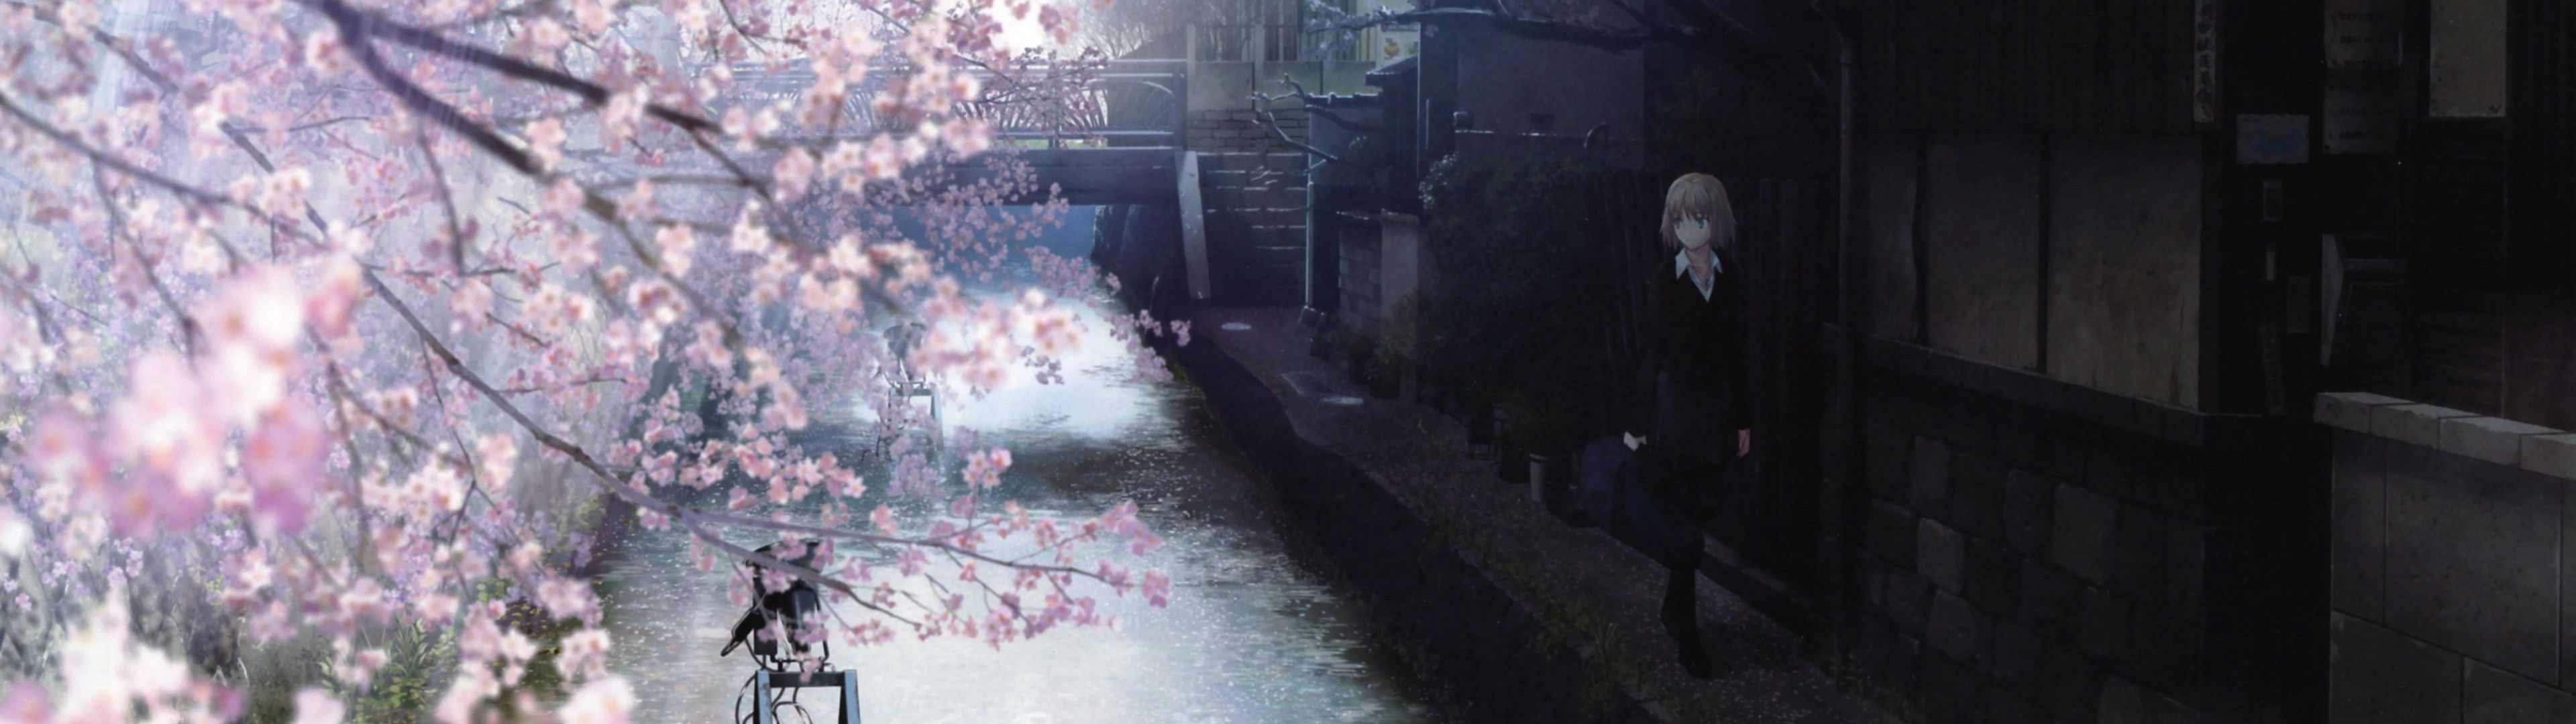 Download 3840x1080 Anime Girl, Stream, Cherry Blossom, Buildings, Scenic Wallpaper